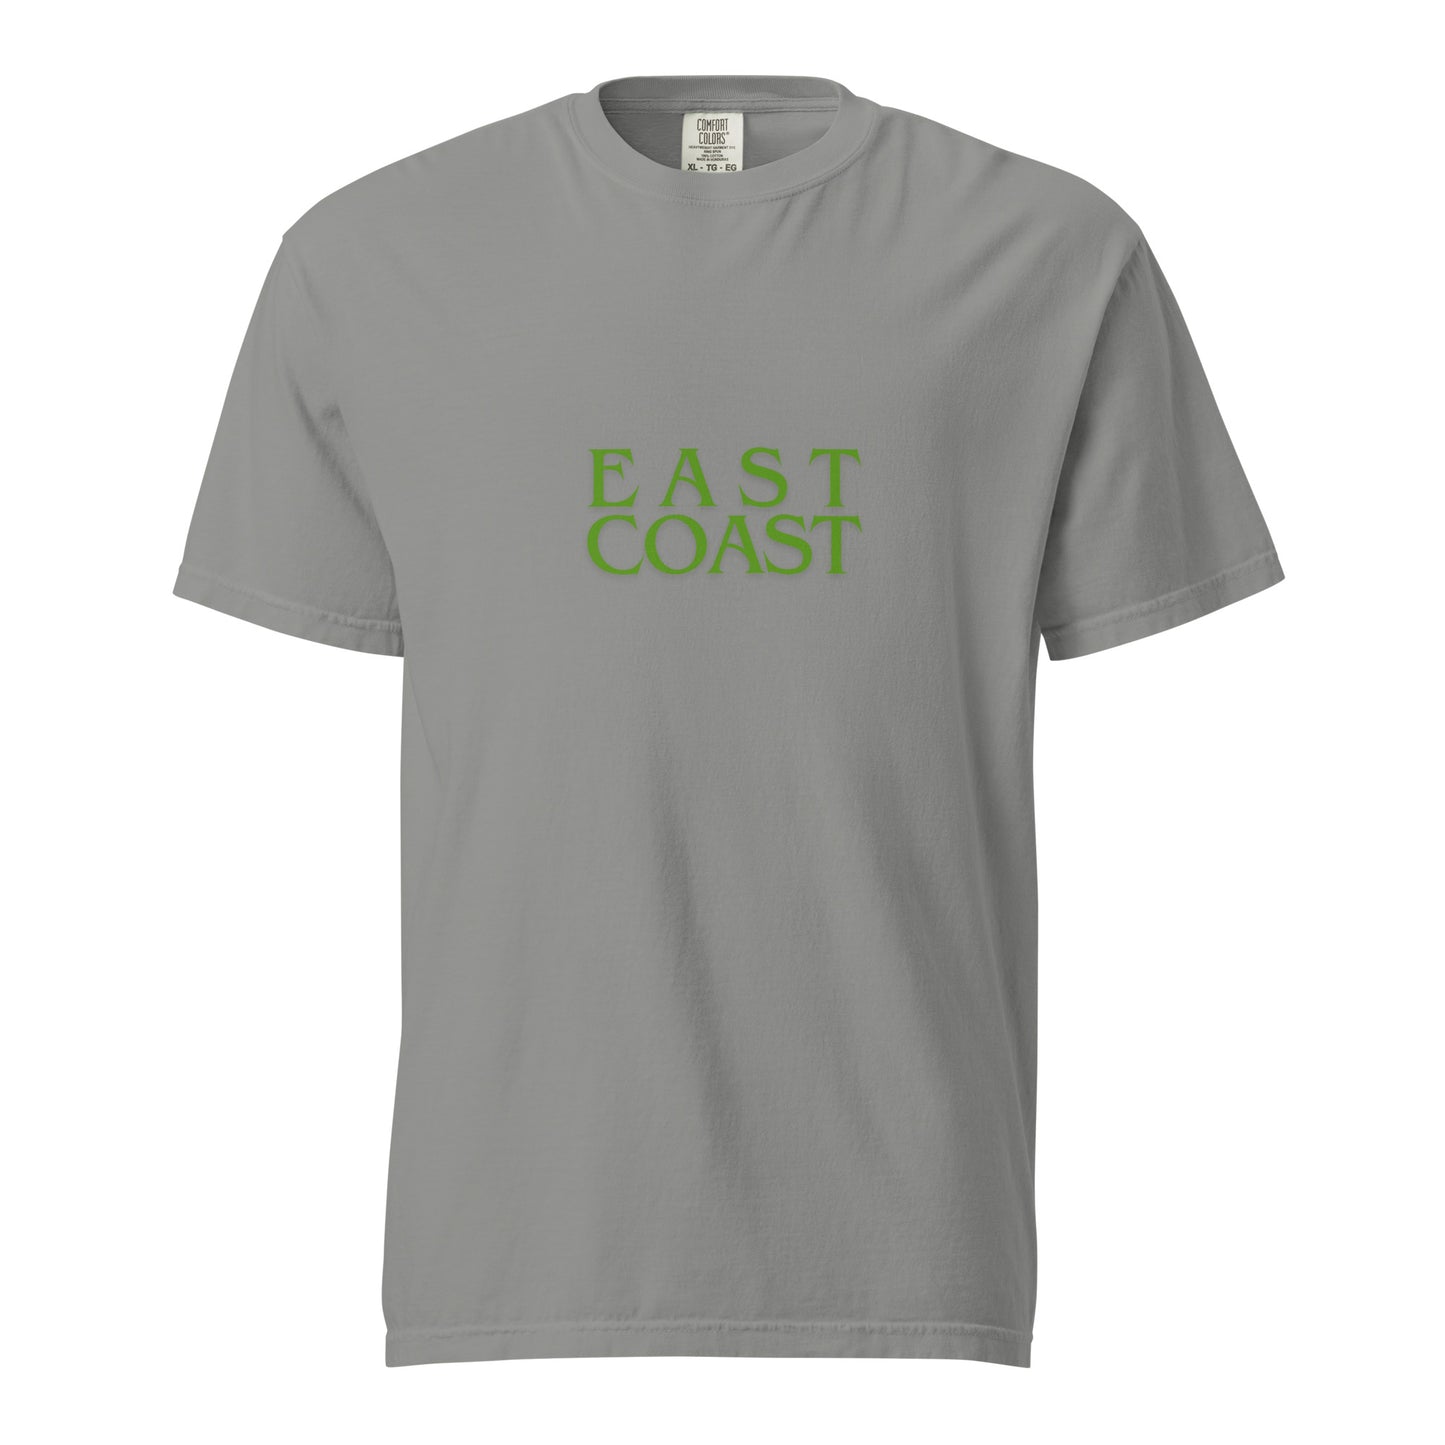 Green East Coast t-shirt